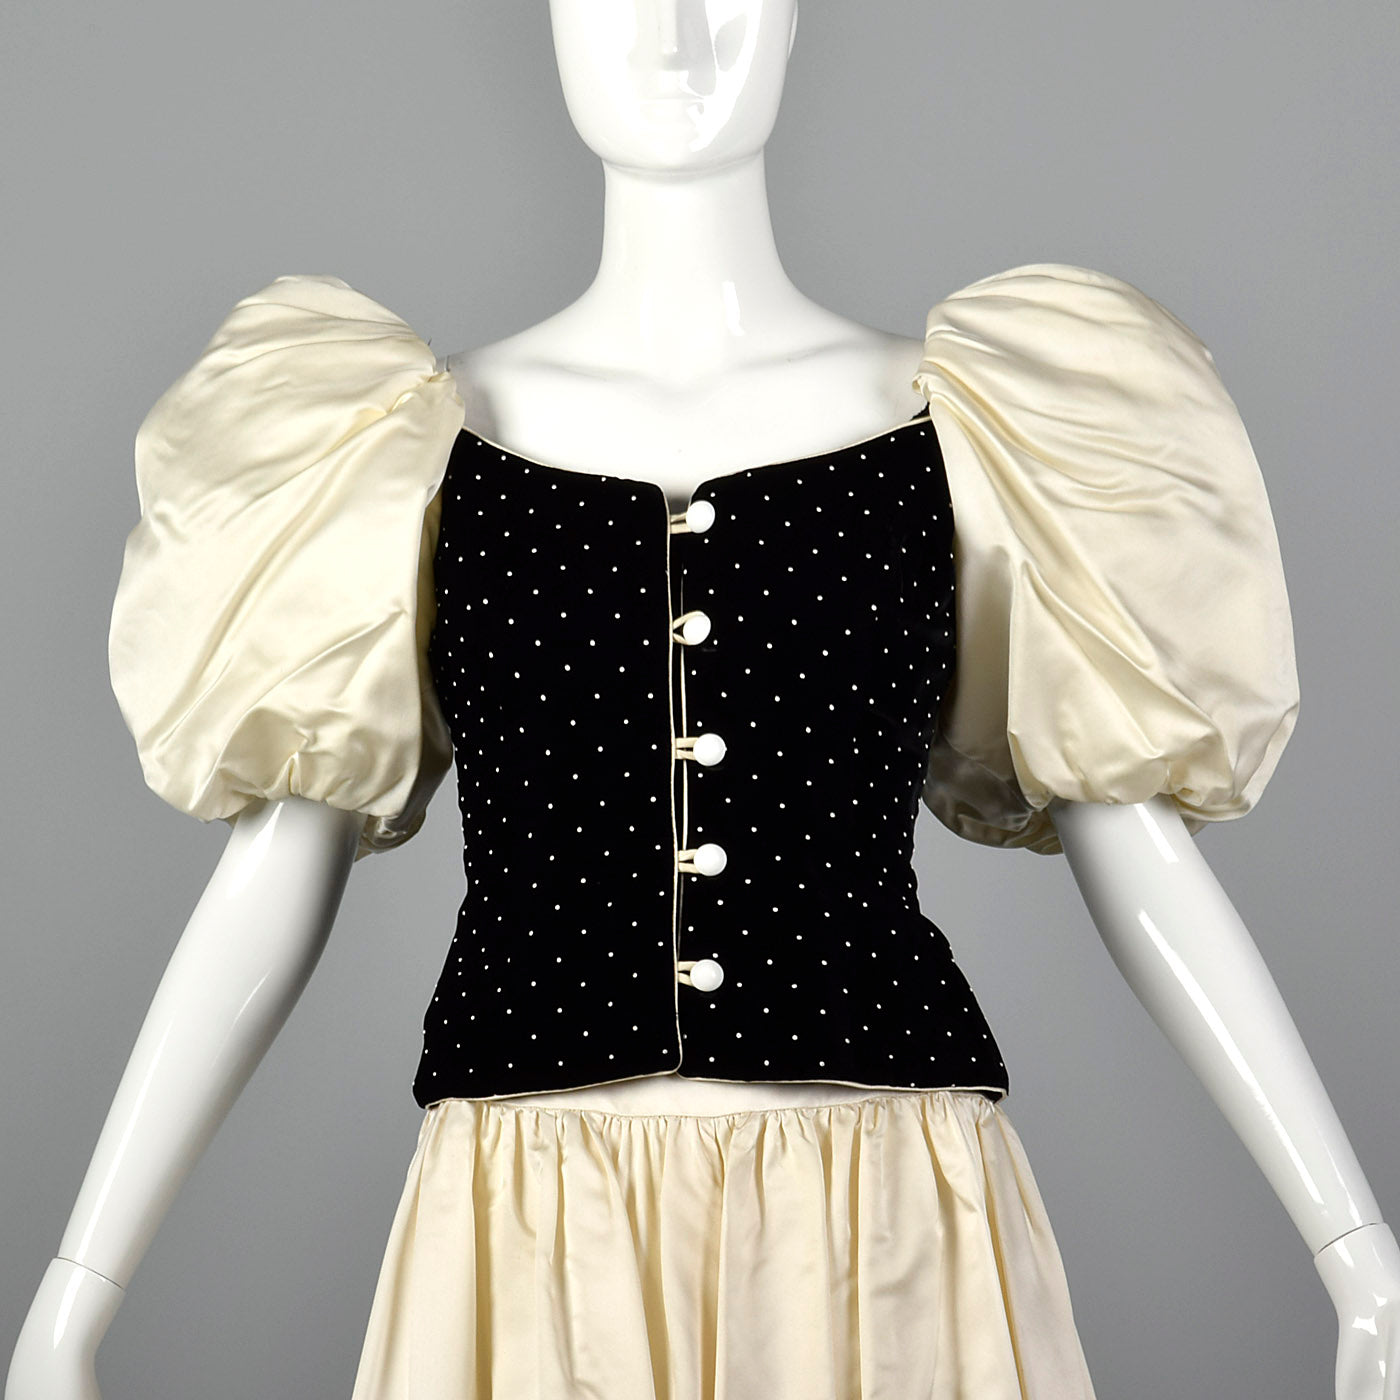 Small Patricia Rhodes 1980s Black Bodice Cream Skirt Dress Set